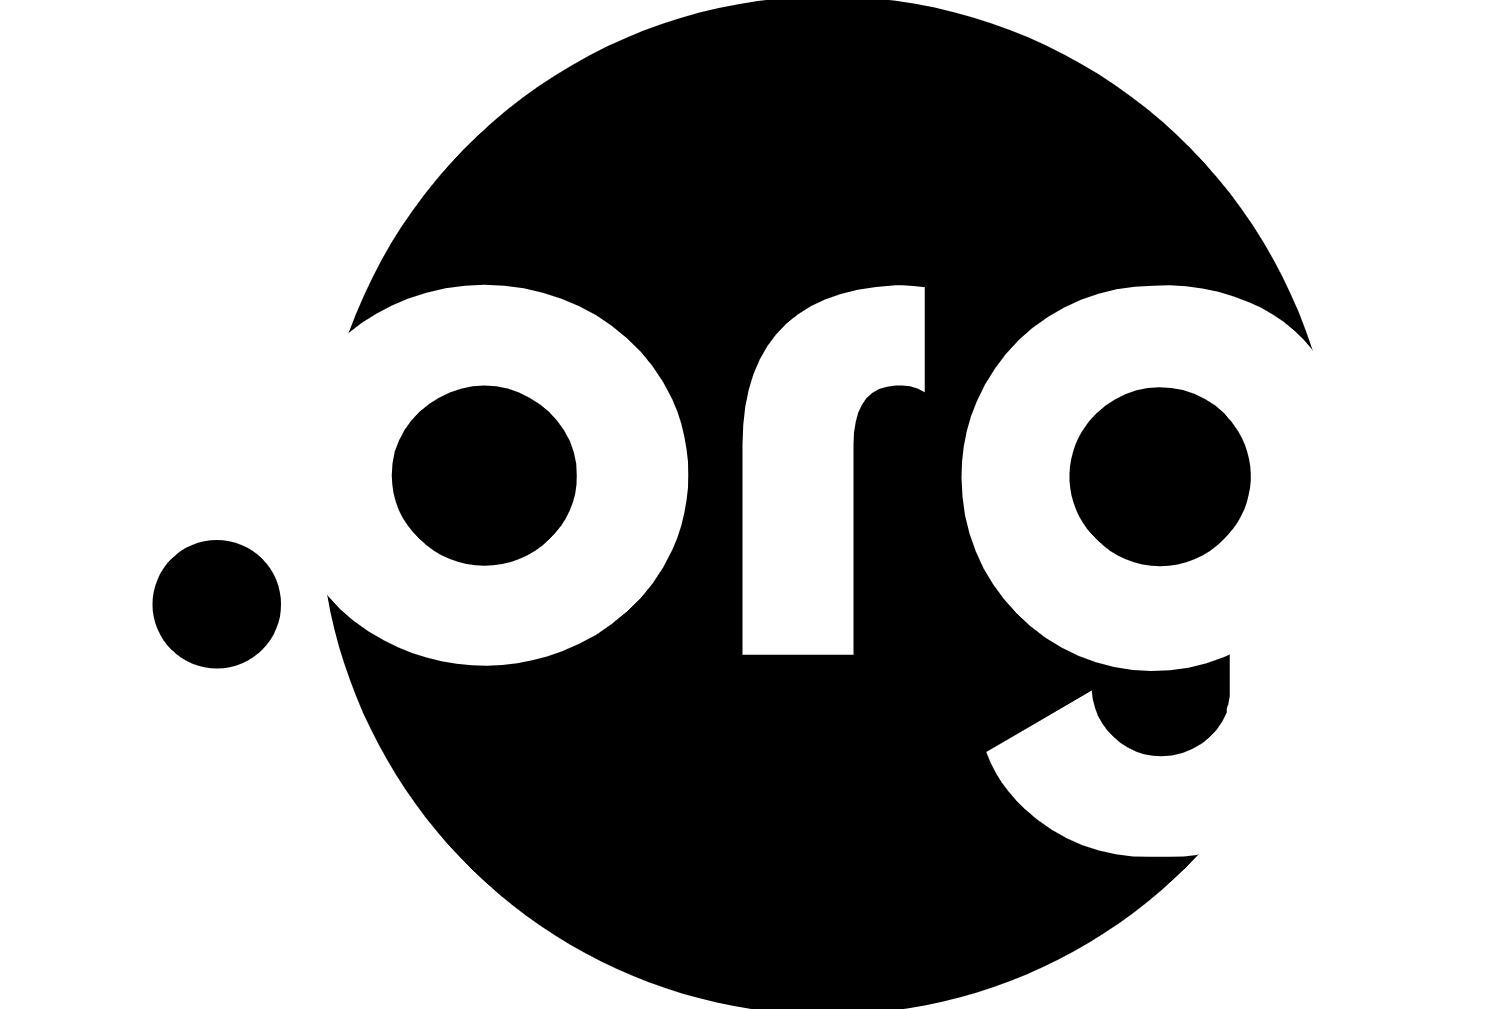 Logos org. Org logo. .Org.org. .Org domain. DOTORG.